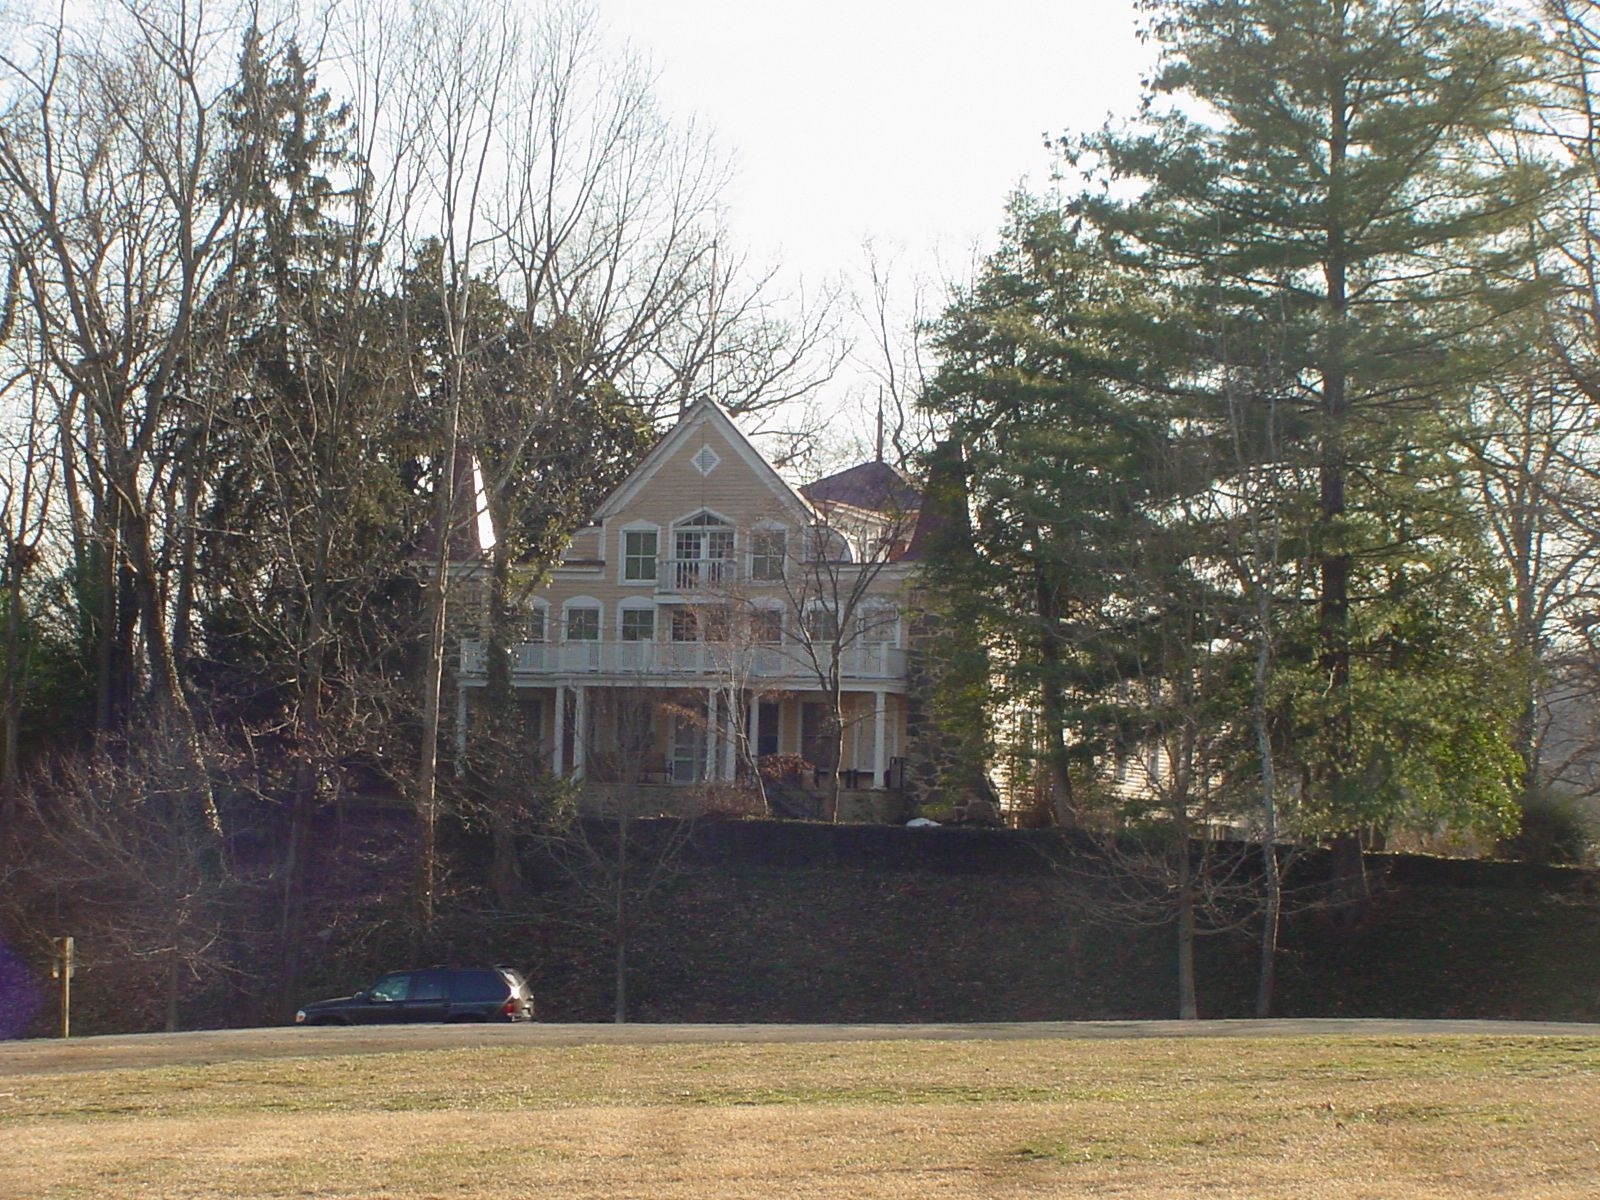 Winter View of The Clara Barton House